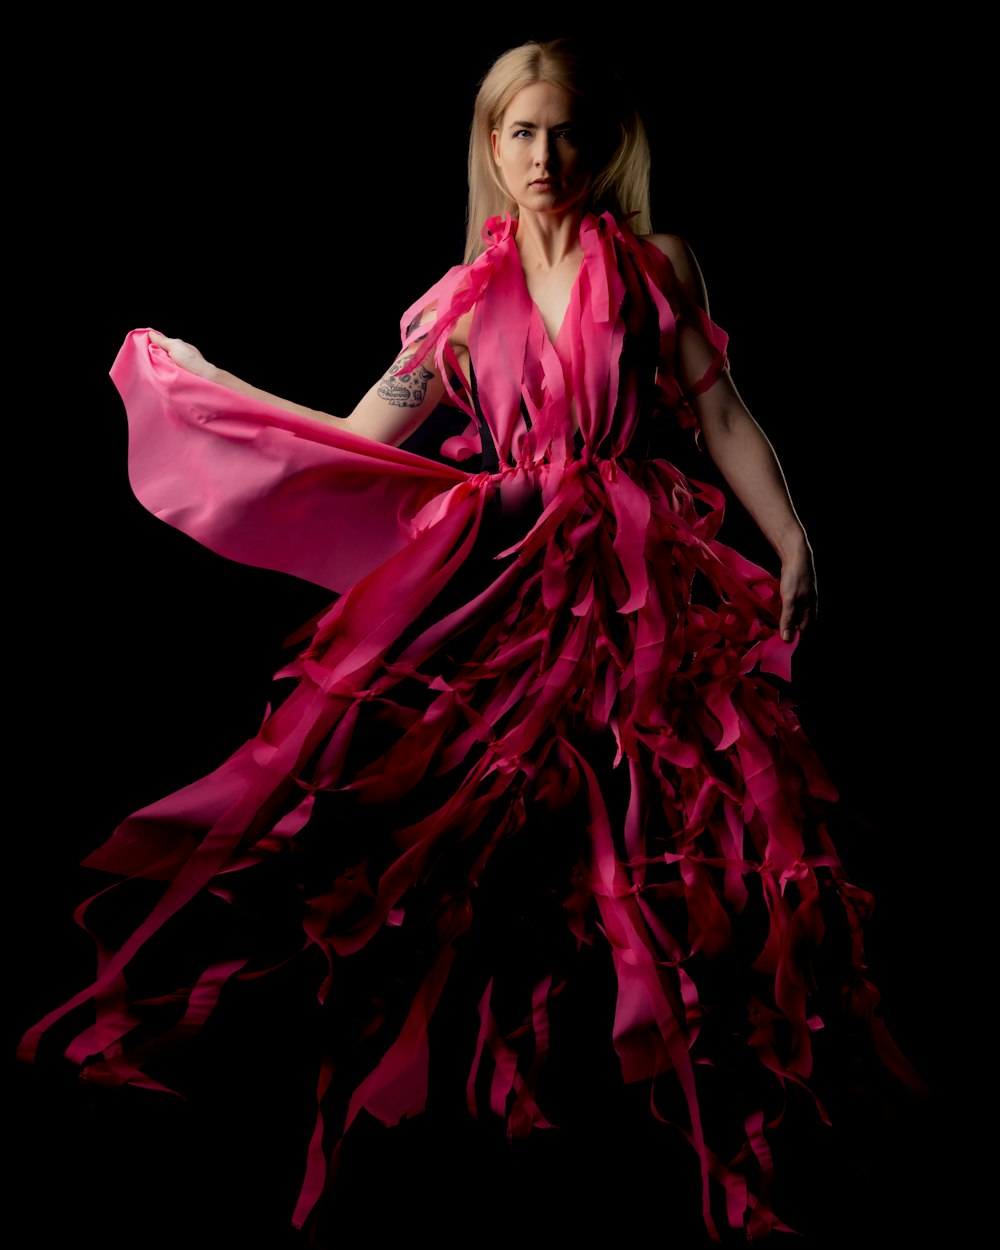 woman in pink sleeveless dress